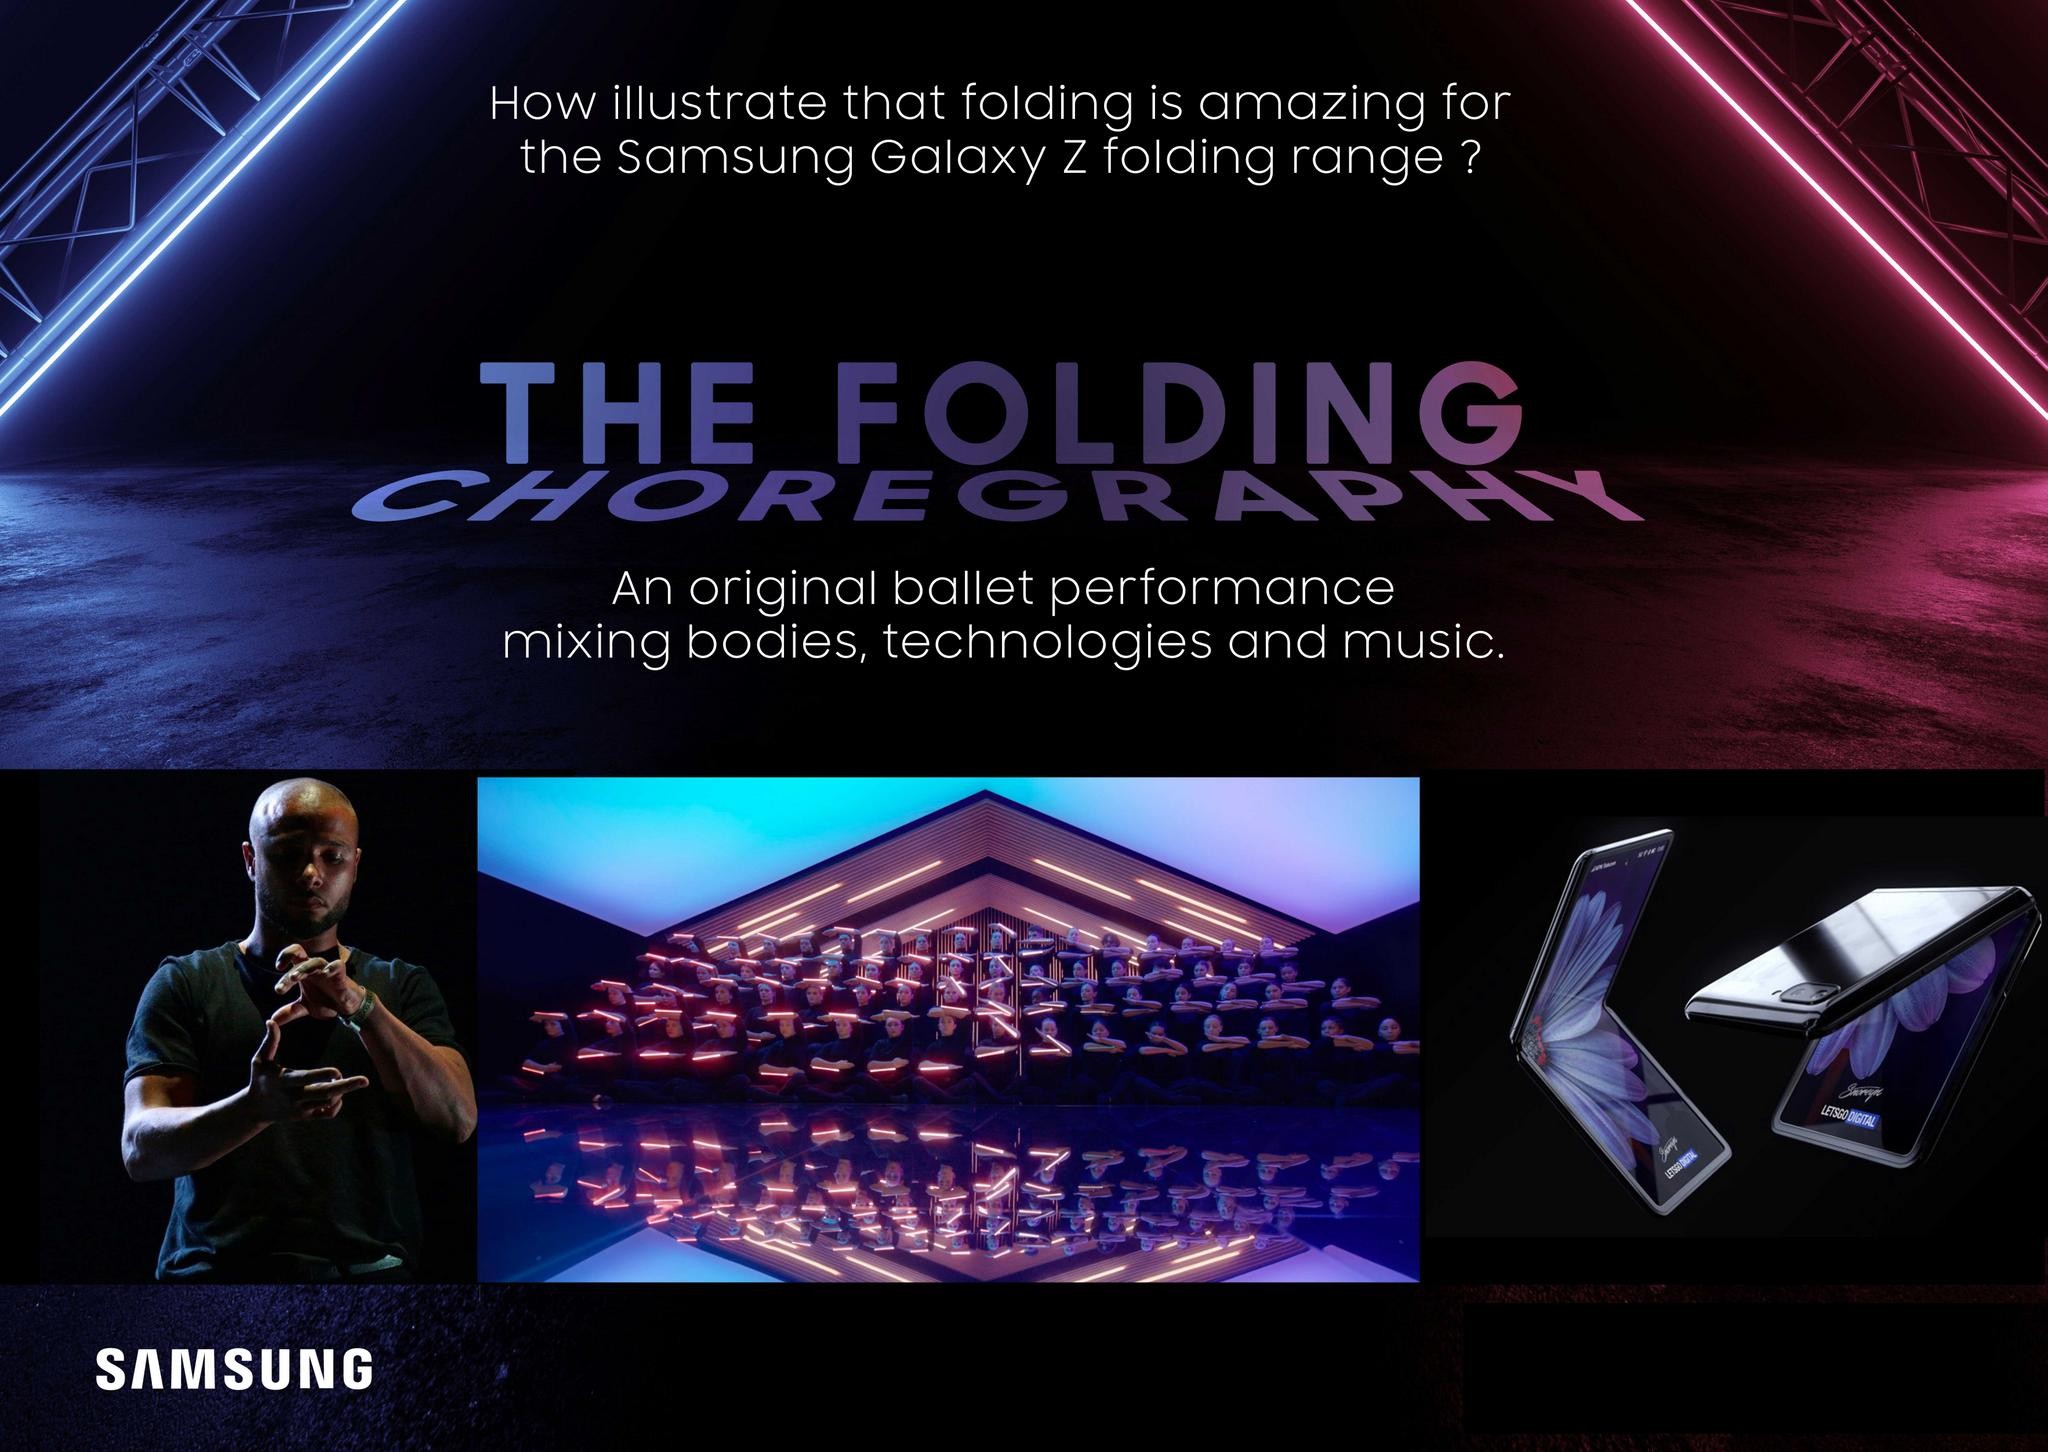 The Folding Choreography